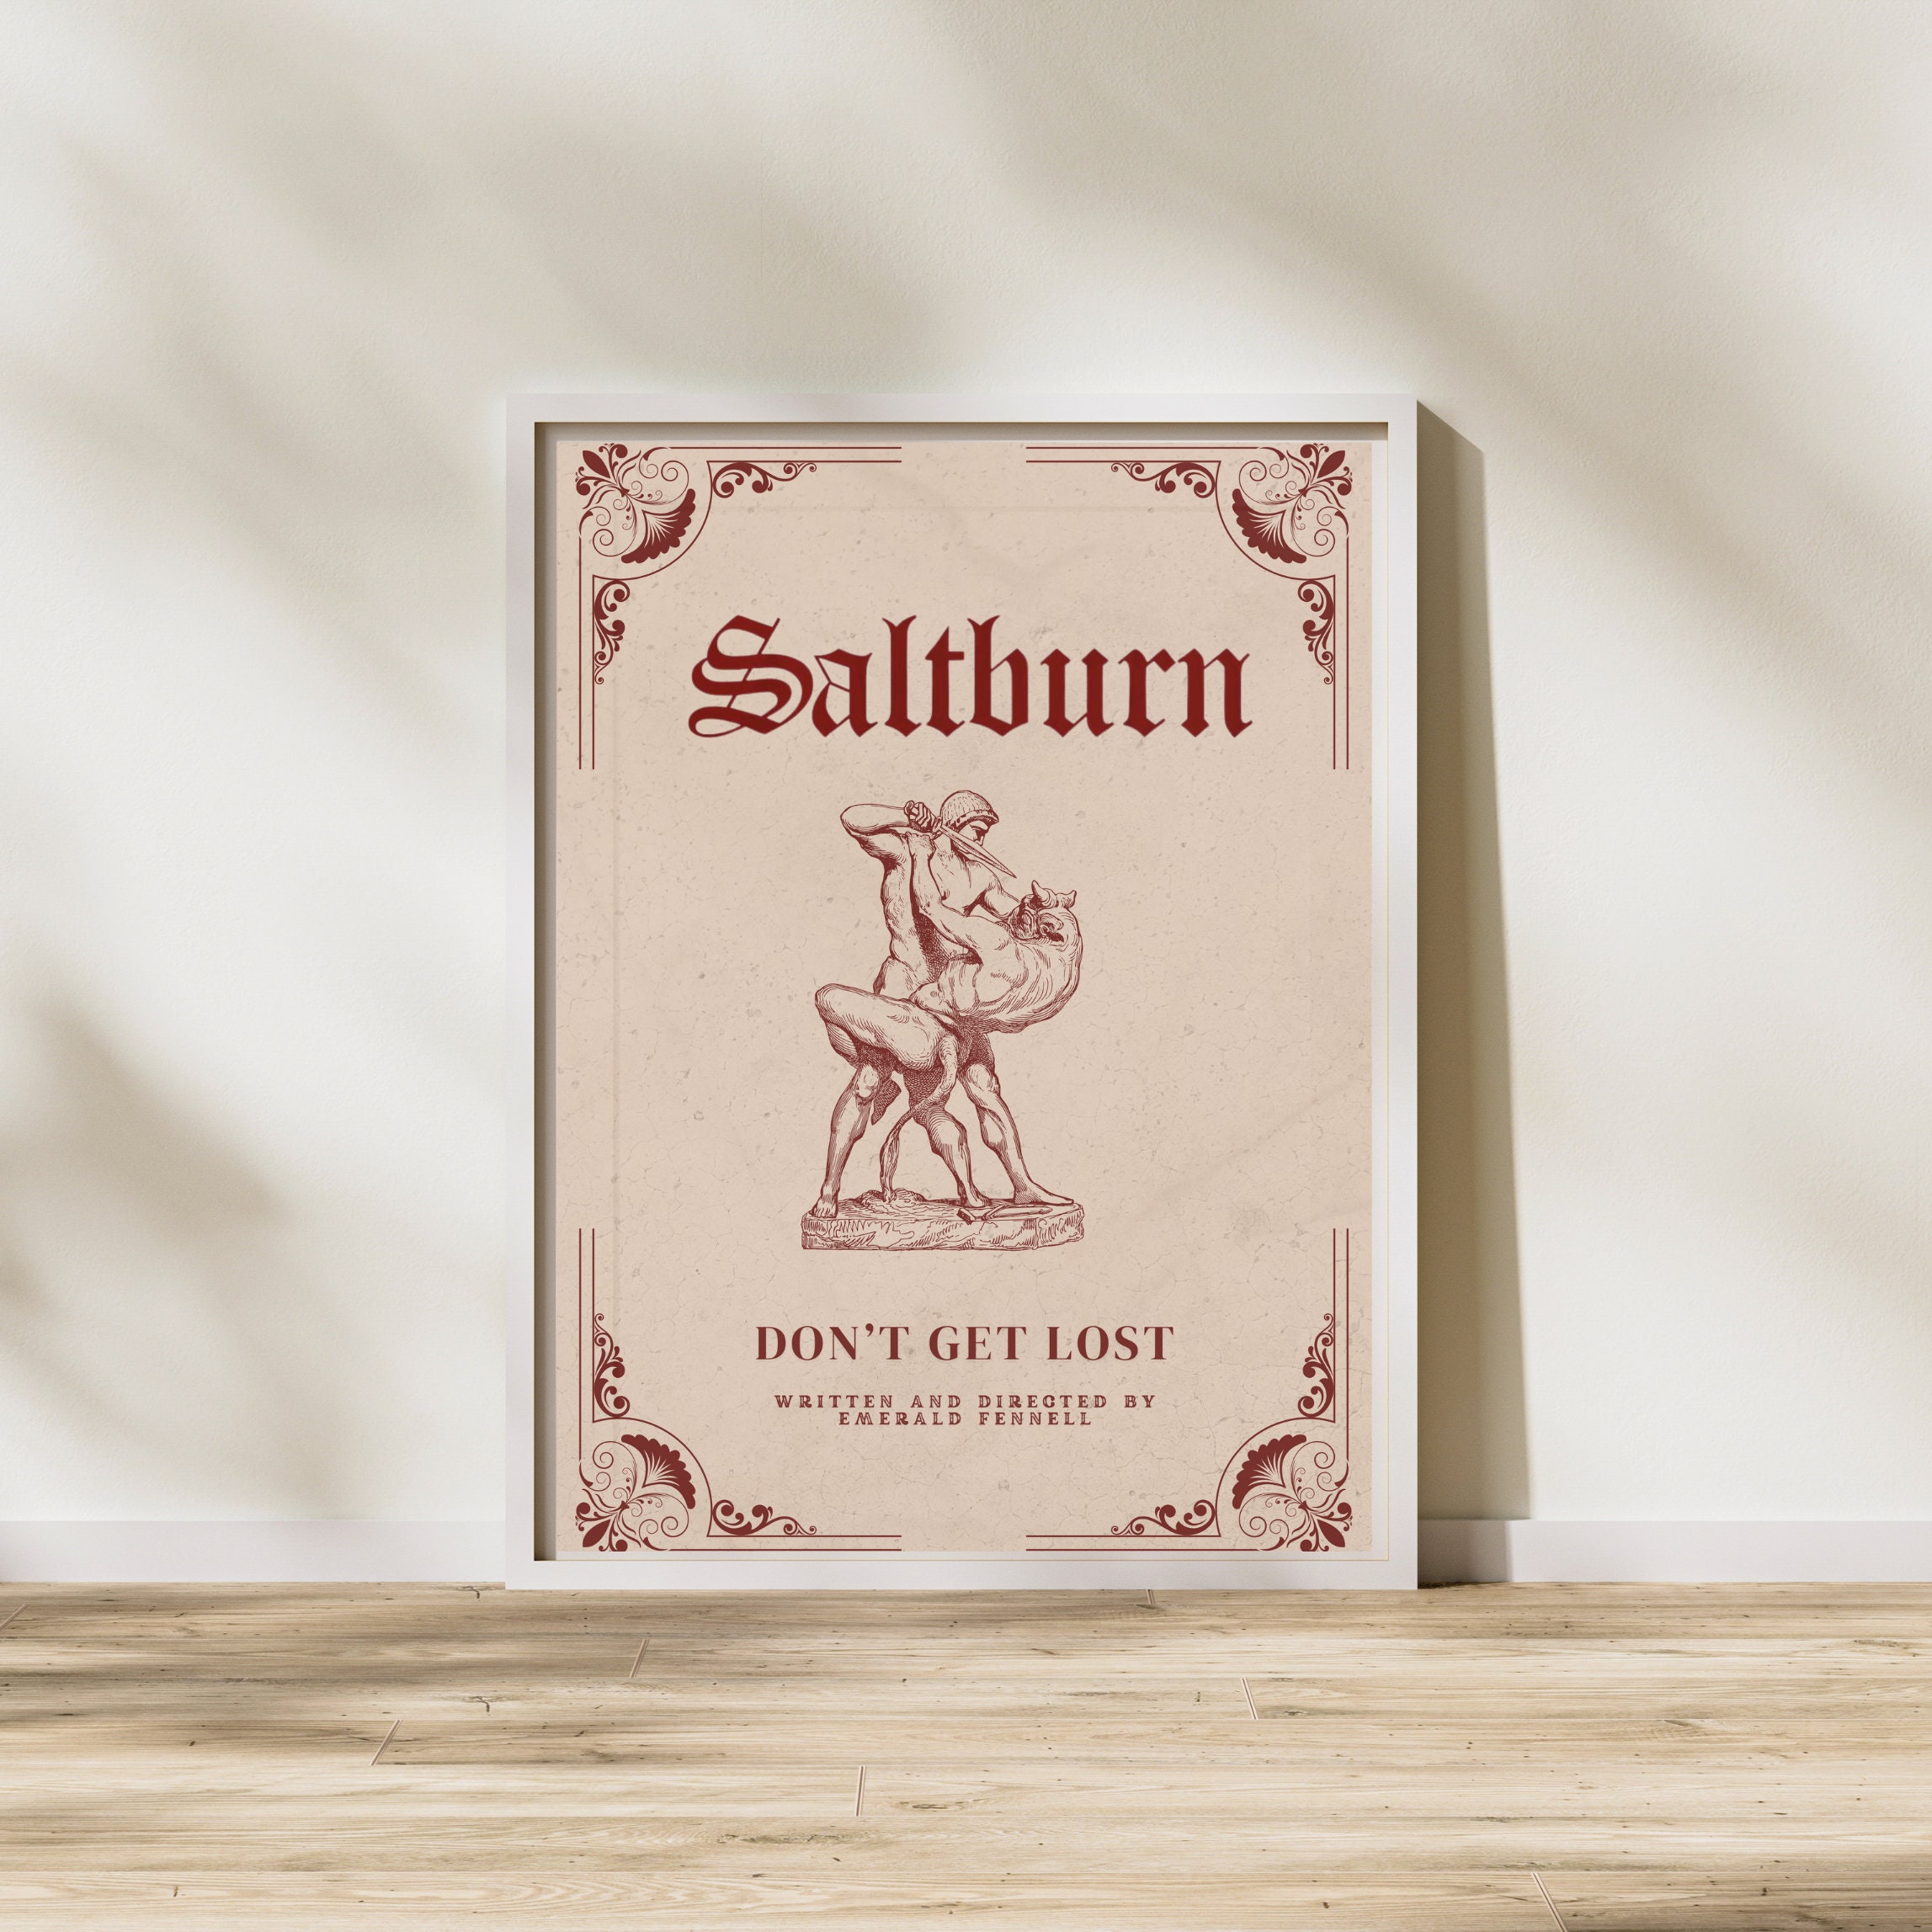 I created a poster for Saltburn : r/saltburn